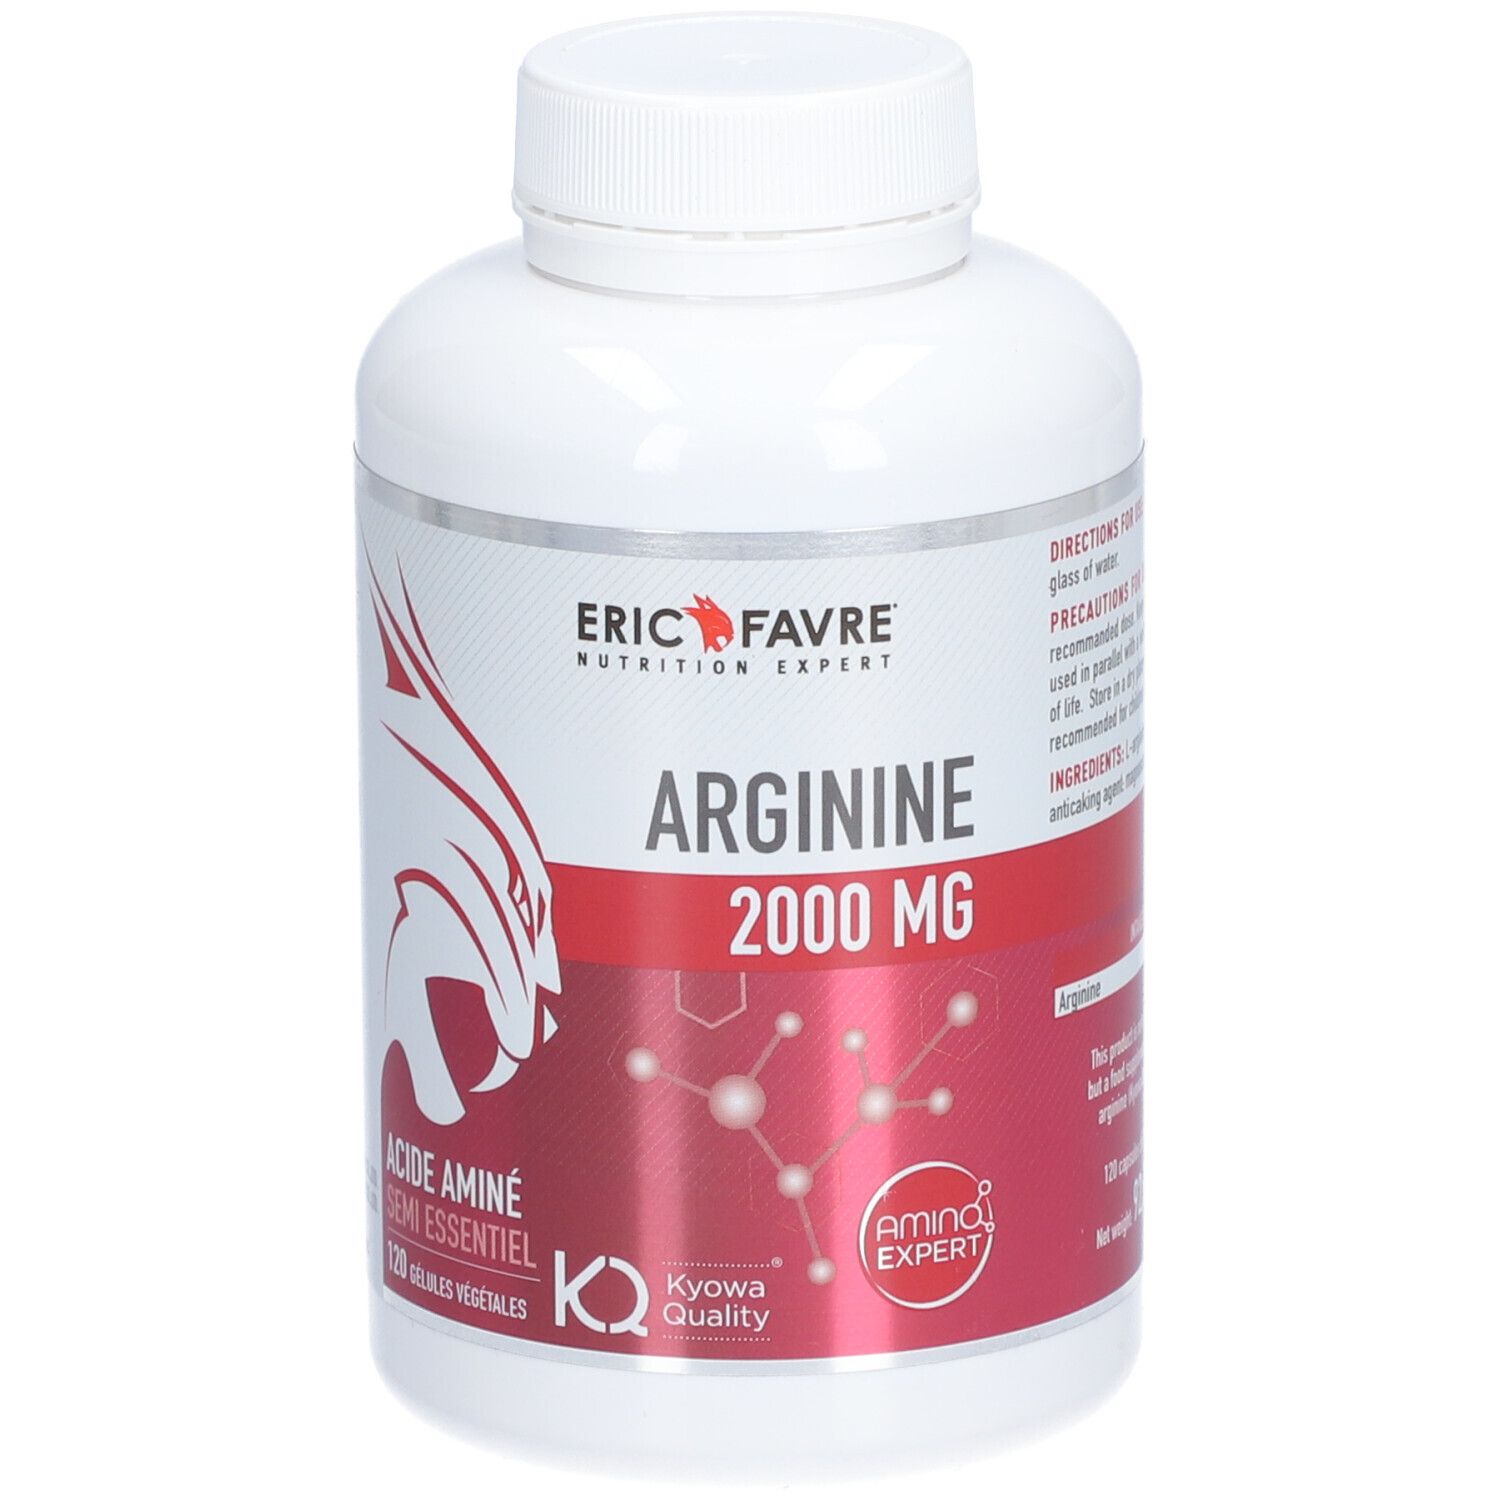 Eric Favre Arginine 2000 mg